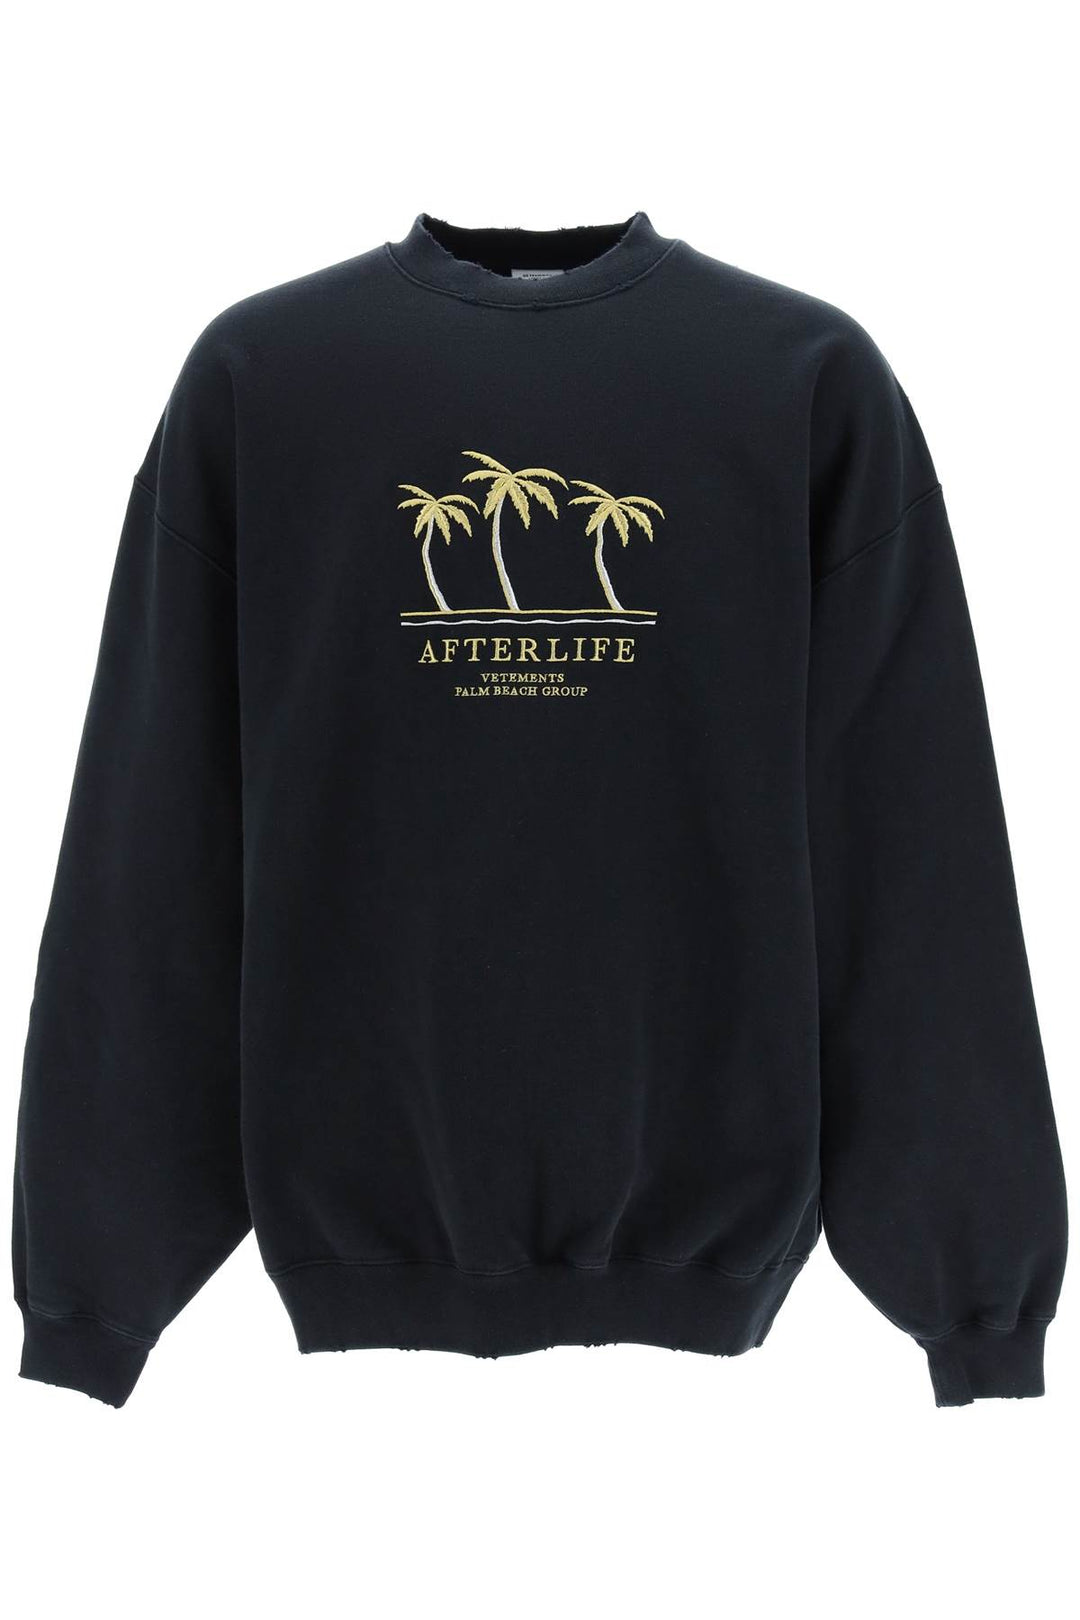 Vetements Afterlife Embroidery Sweatshirt   Nero